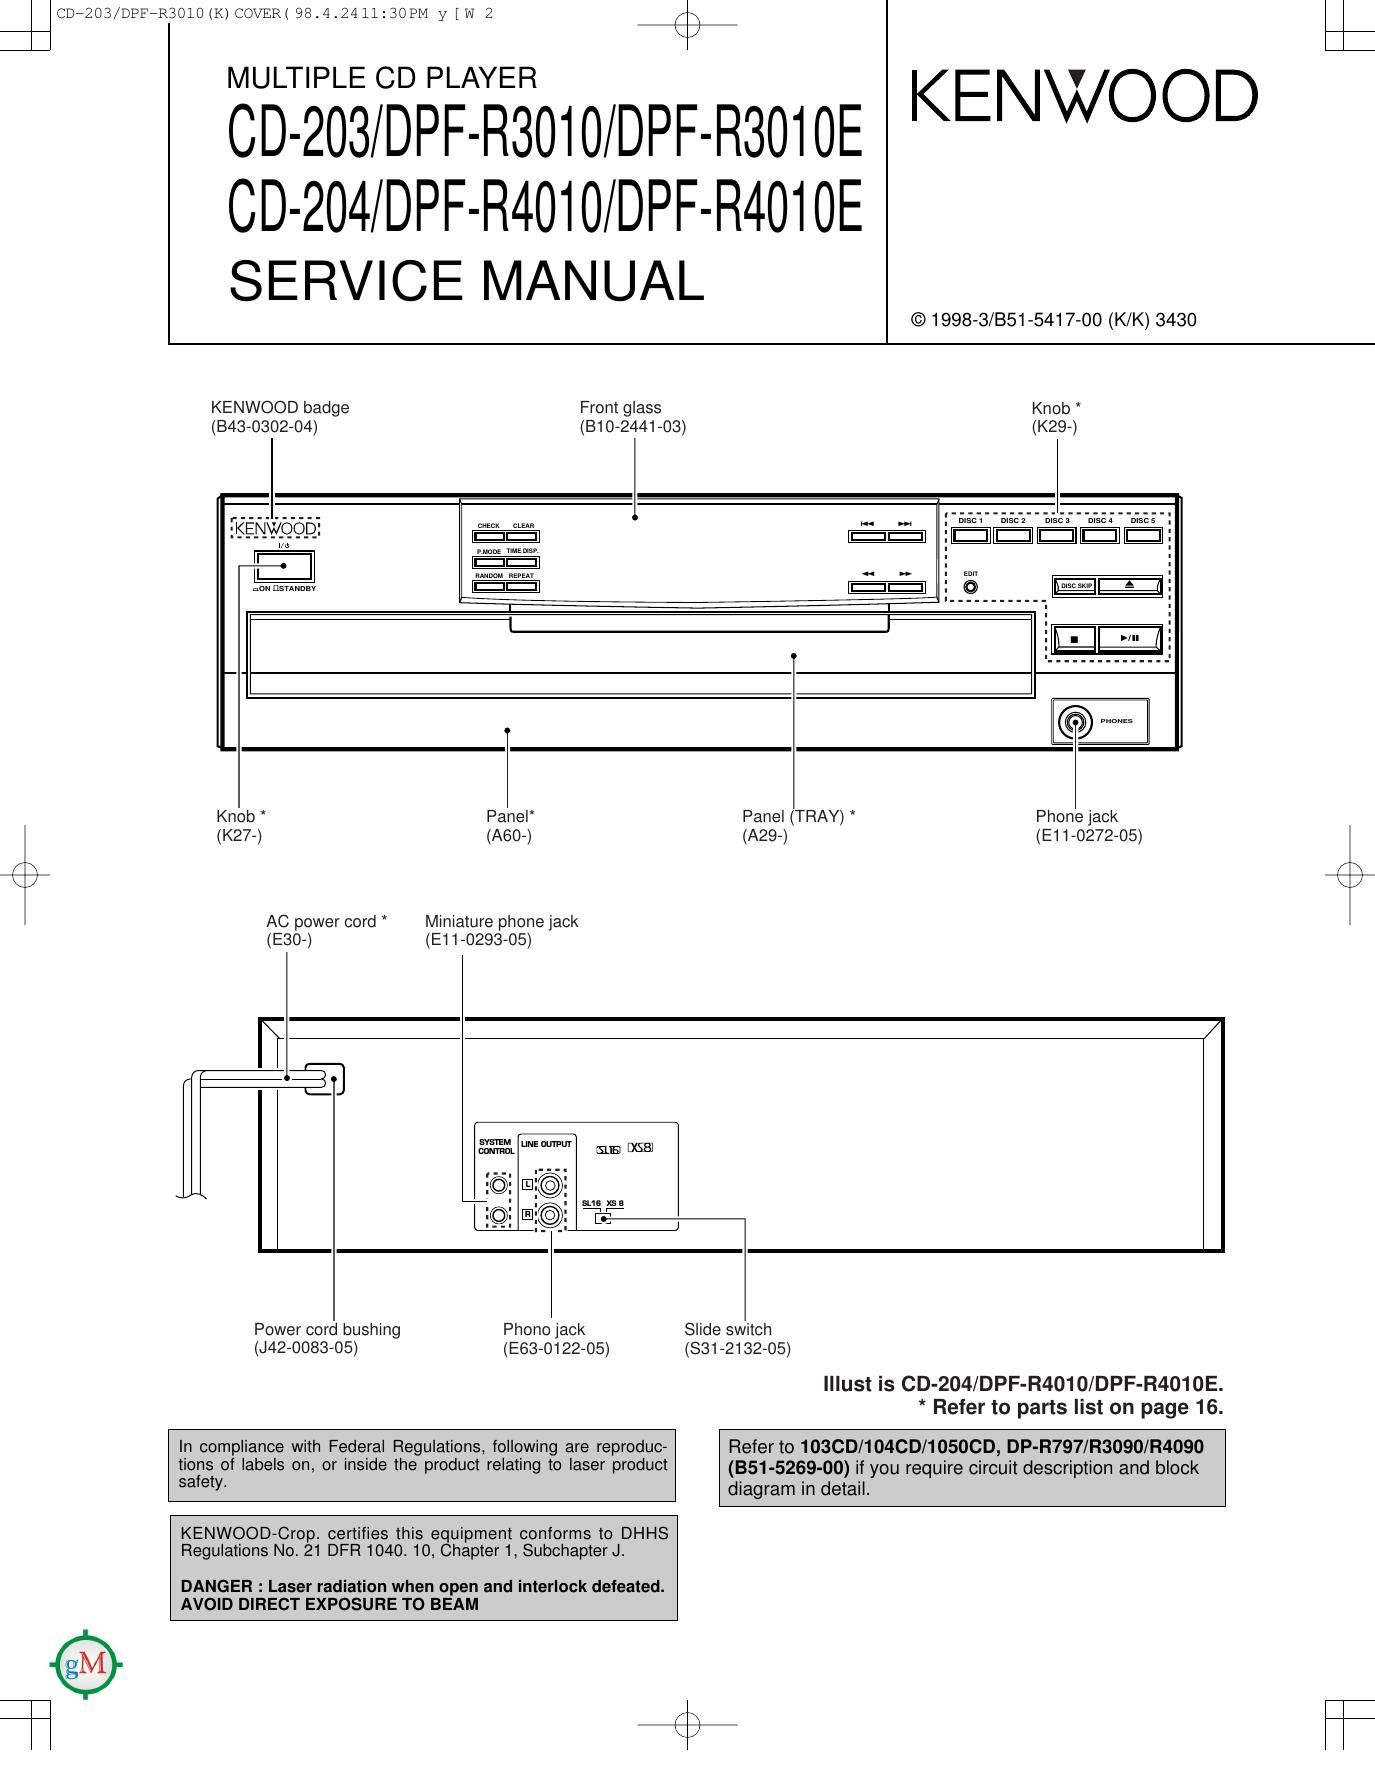 Kenwood DPFR 3010 E Service Manual